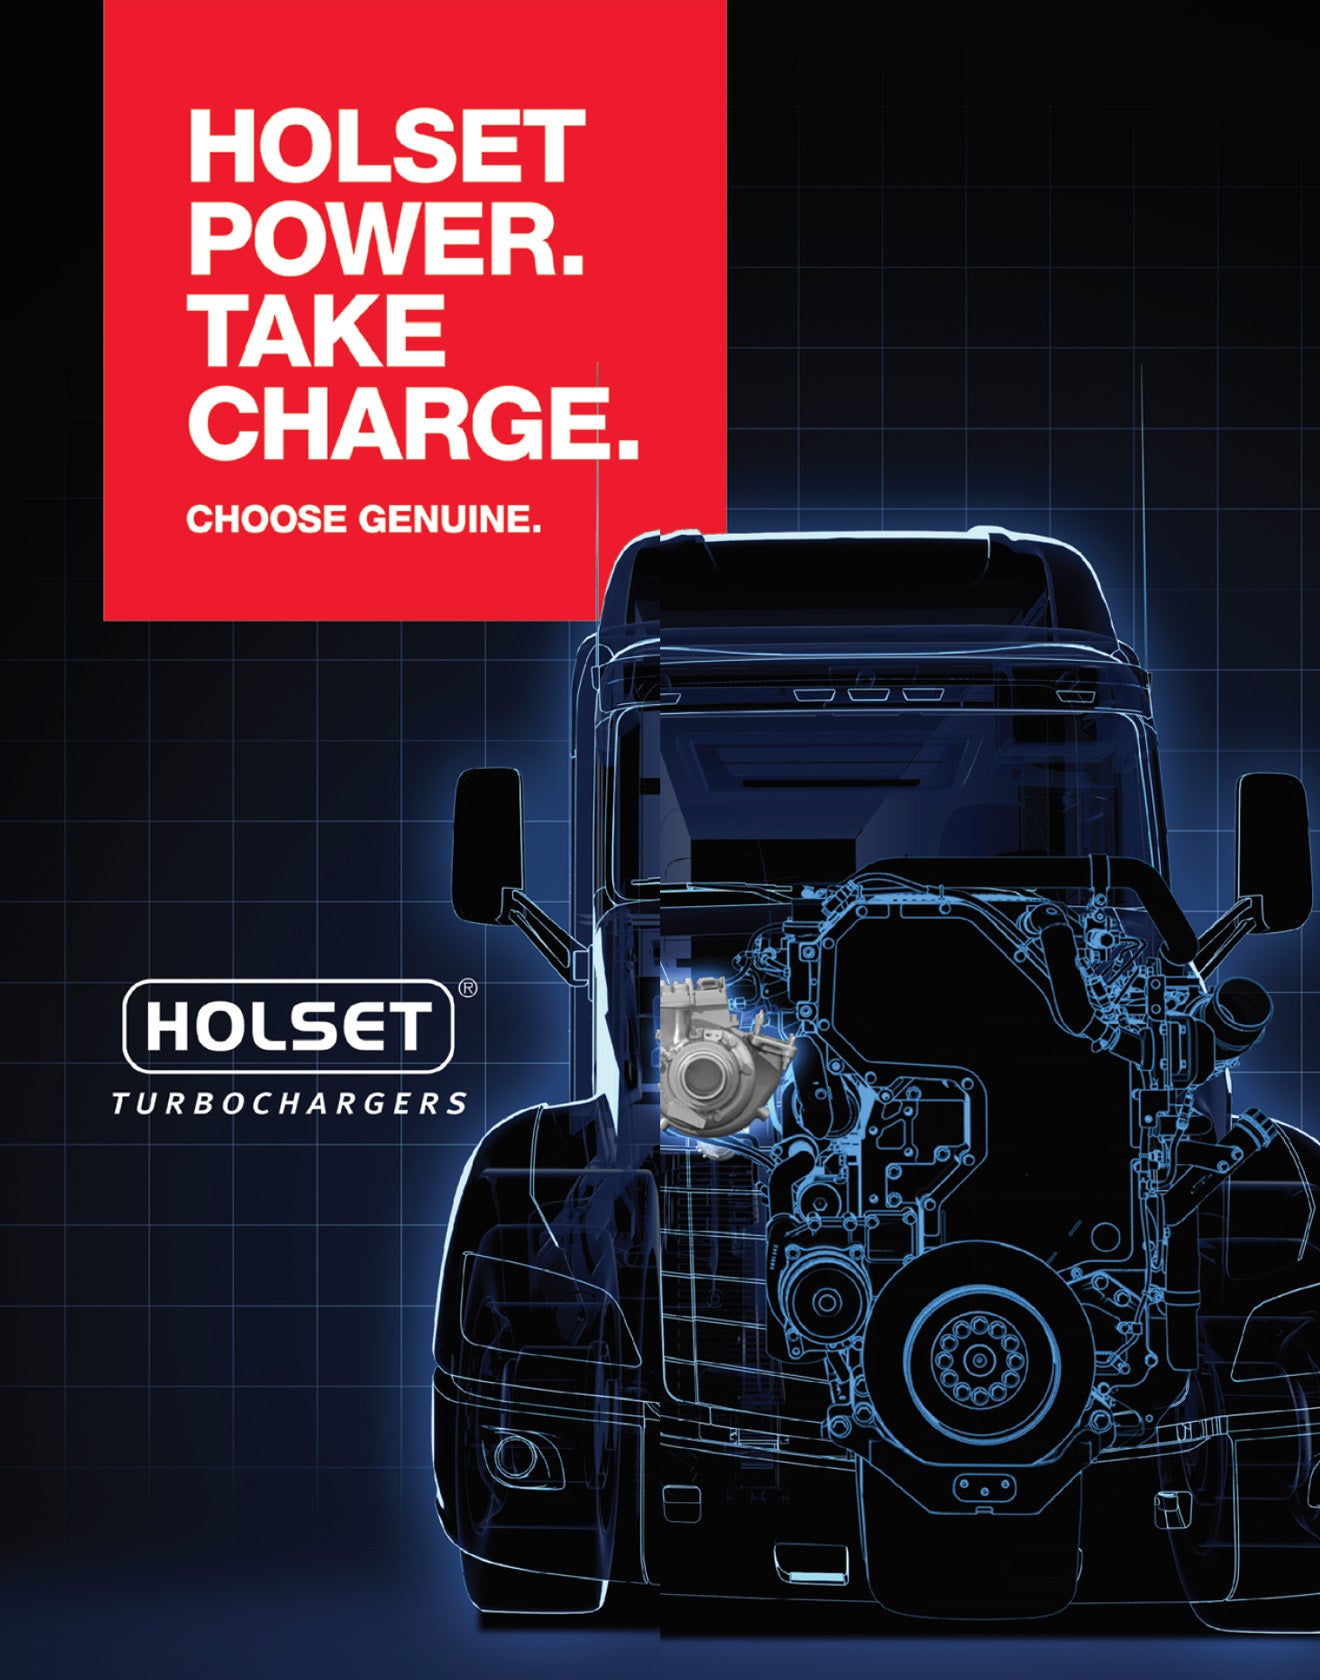 Holset Power. Take Charge. Choose Genuine.